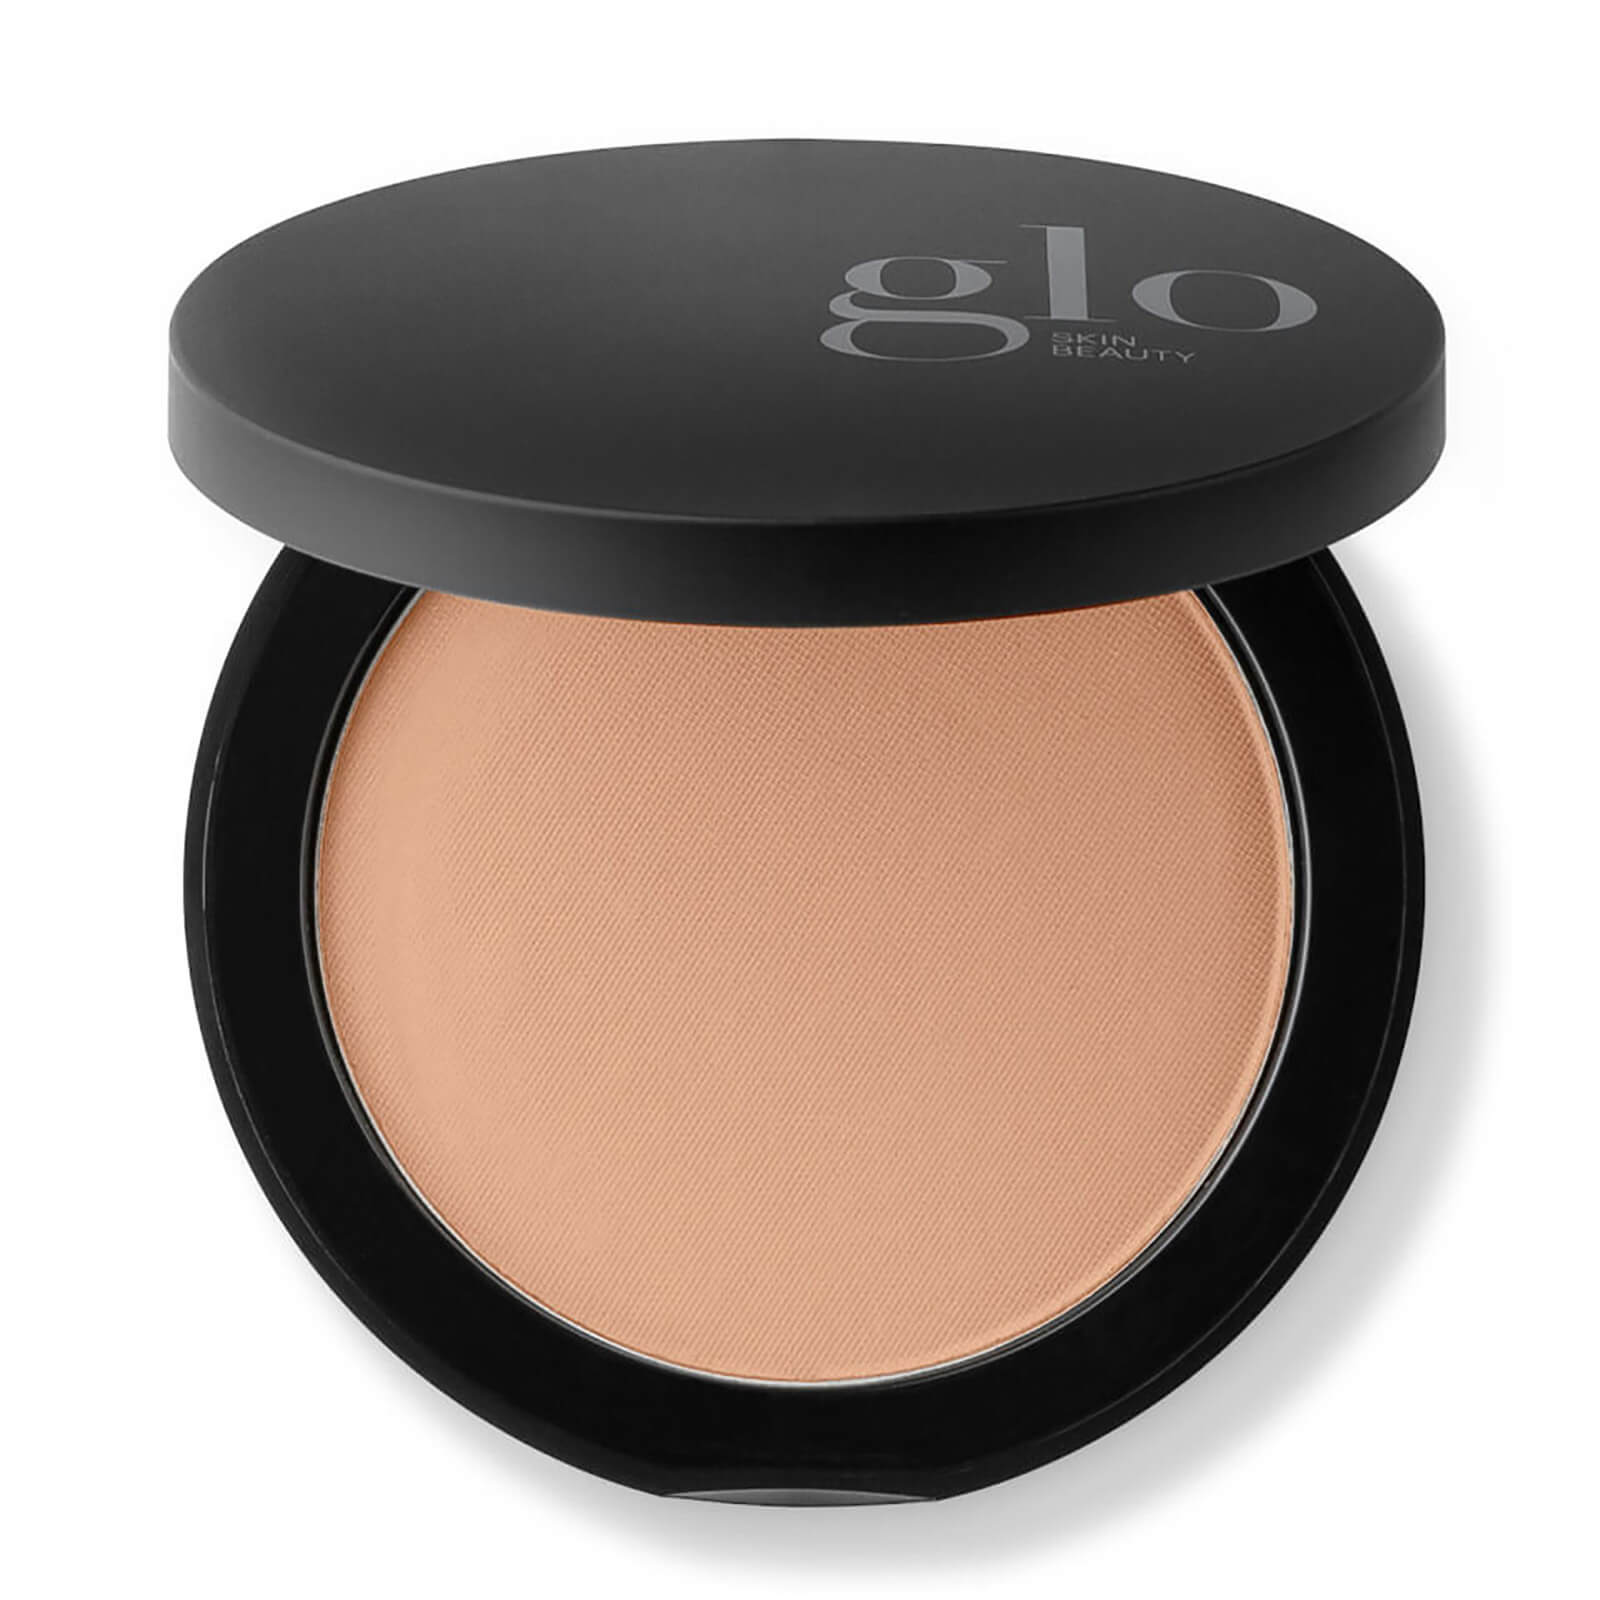 Glo Skin Beauty Pressed Base Powder Foundation (0.35 Oz.) In Natural Dark